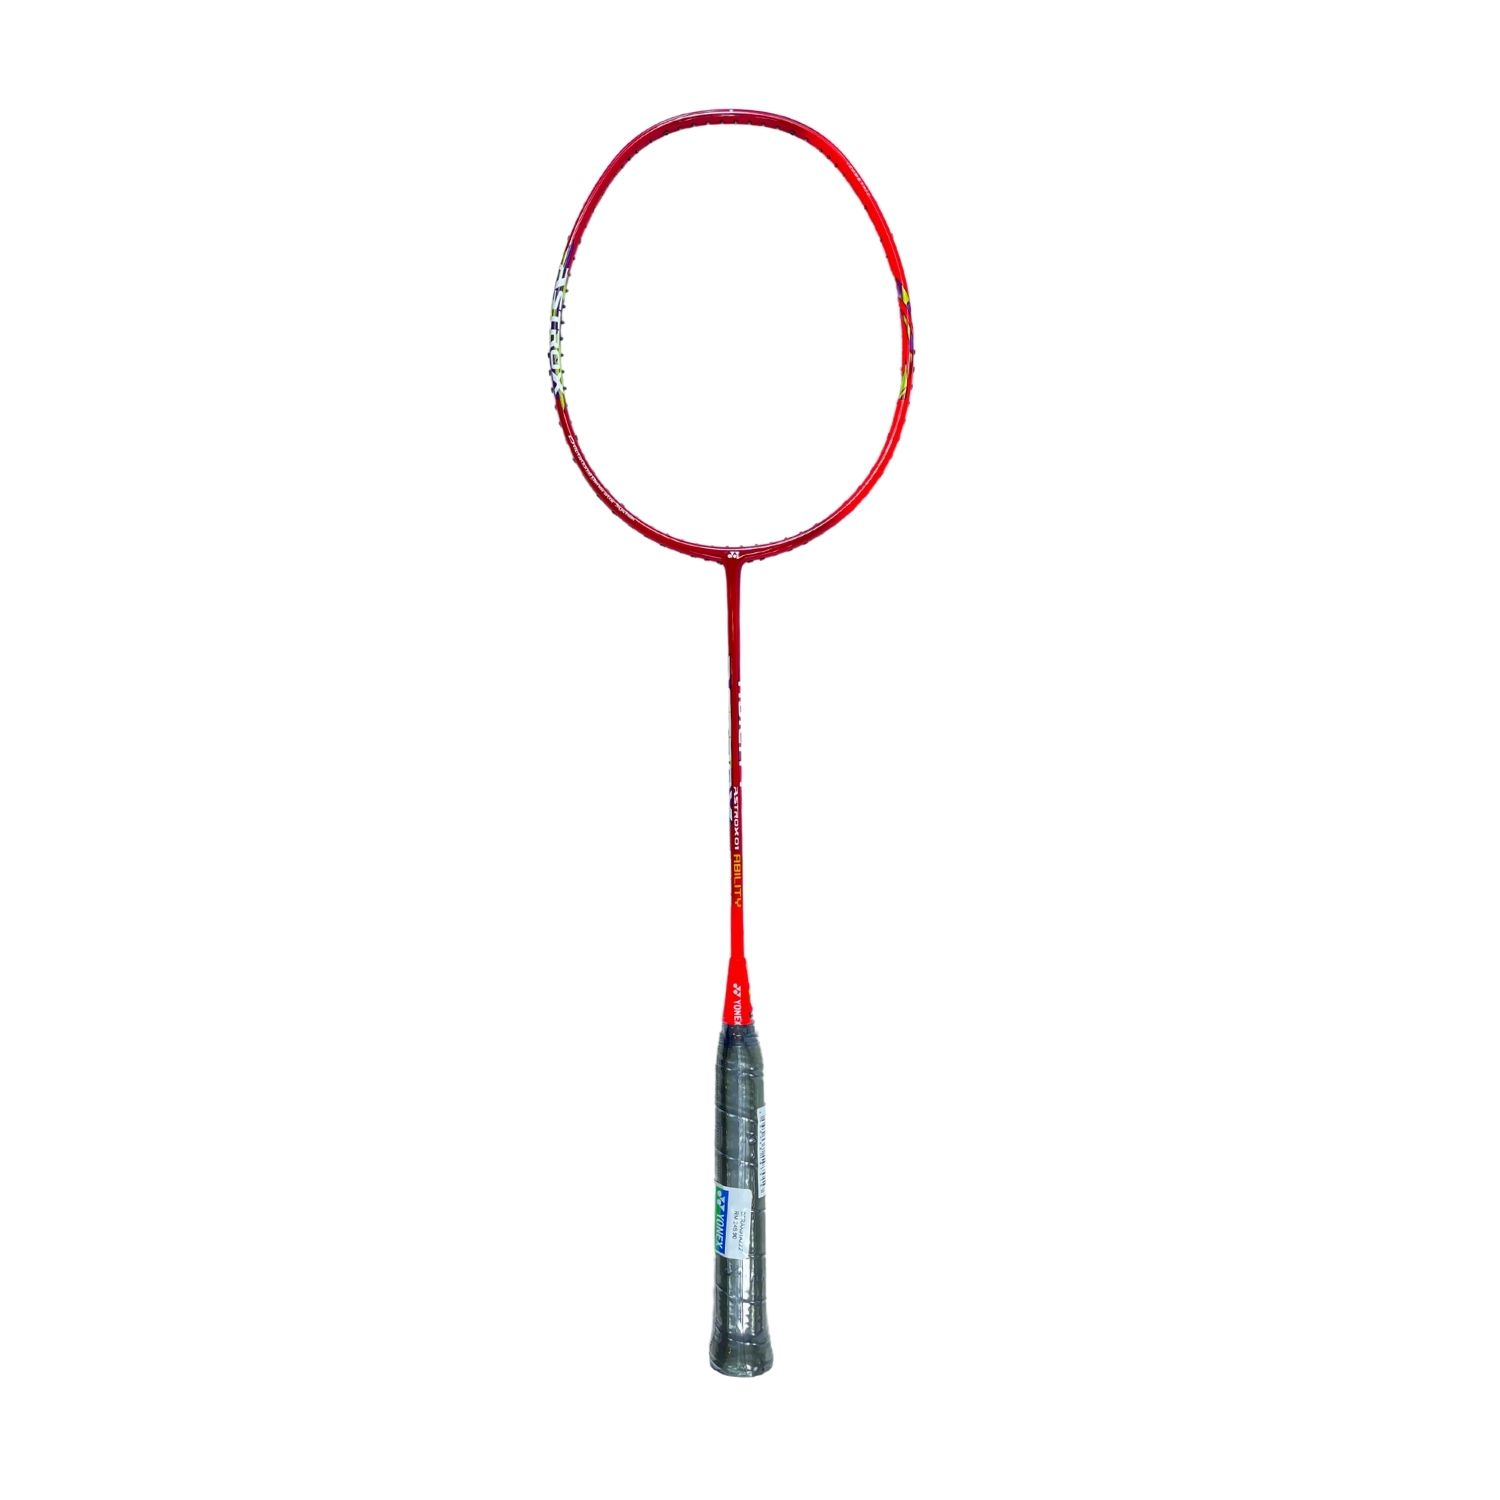 Yonex Astrox 01 Ability Badminton Racket - Red-Badminton Rackets-Pro Sports